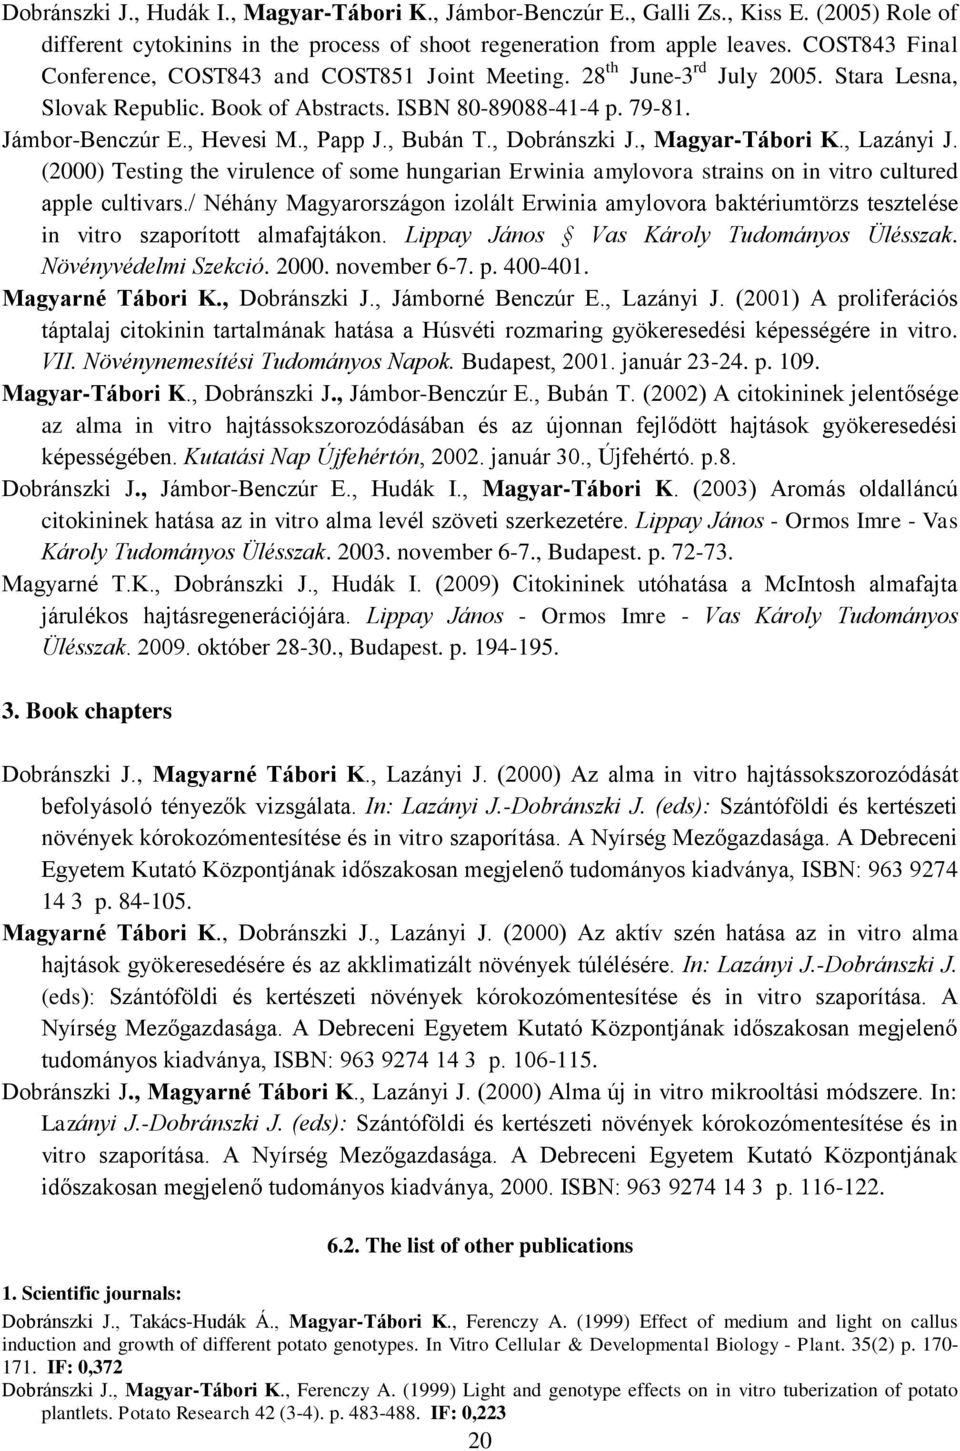 , Papp J., Bubán T., Dobránszki J., Magyar-Tábori K., Lazányi J. (2000) Testing the virulence of some hungarian Erwinia amylovora strains on in vitro cultured apple cultivars.